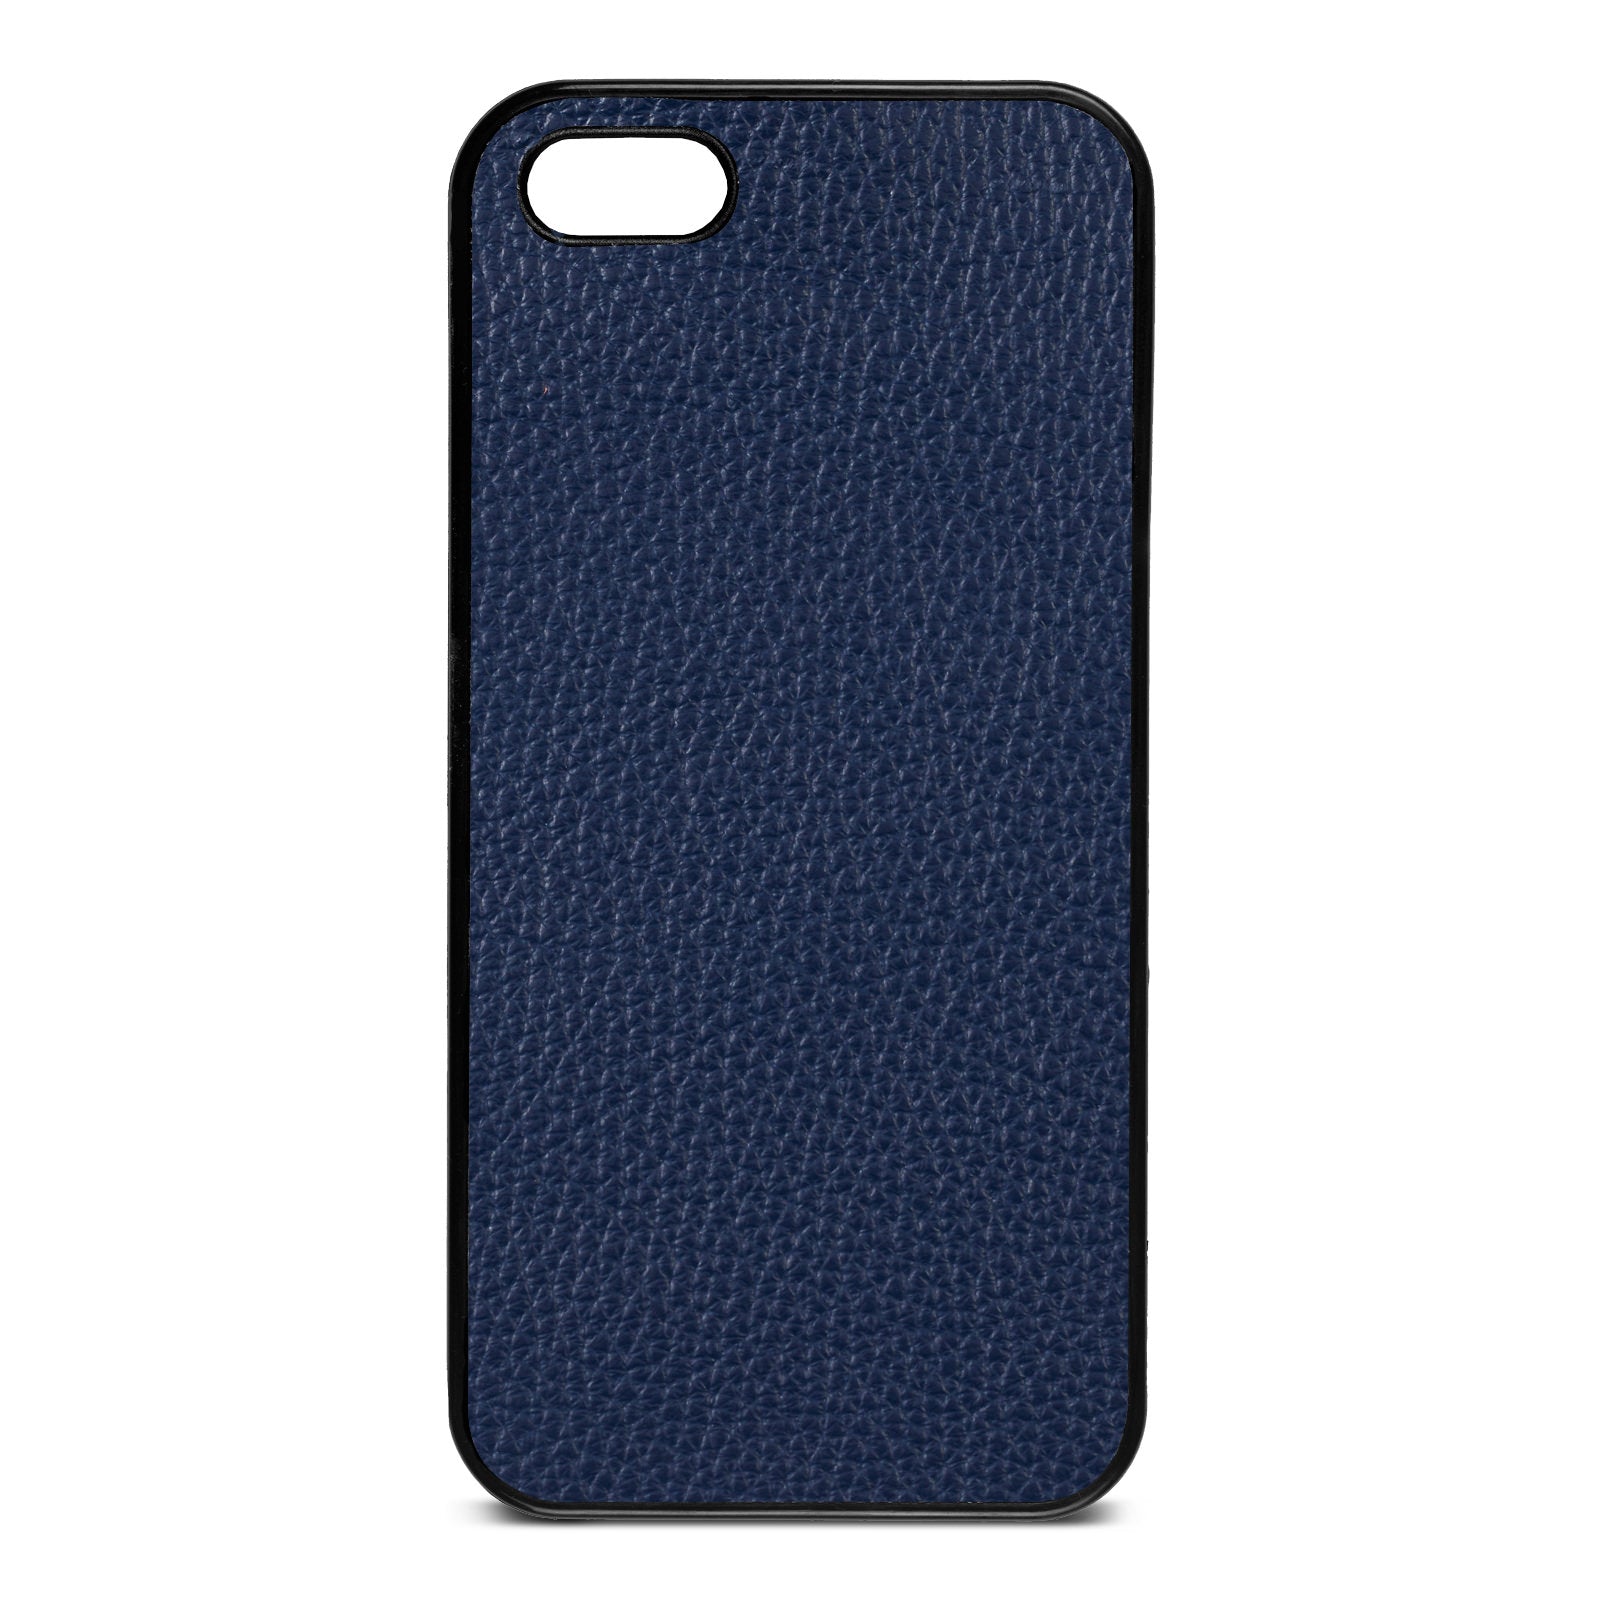 Blank iPhone 5 Navy Blue Pebble Grain Leather Case